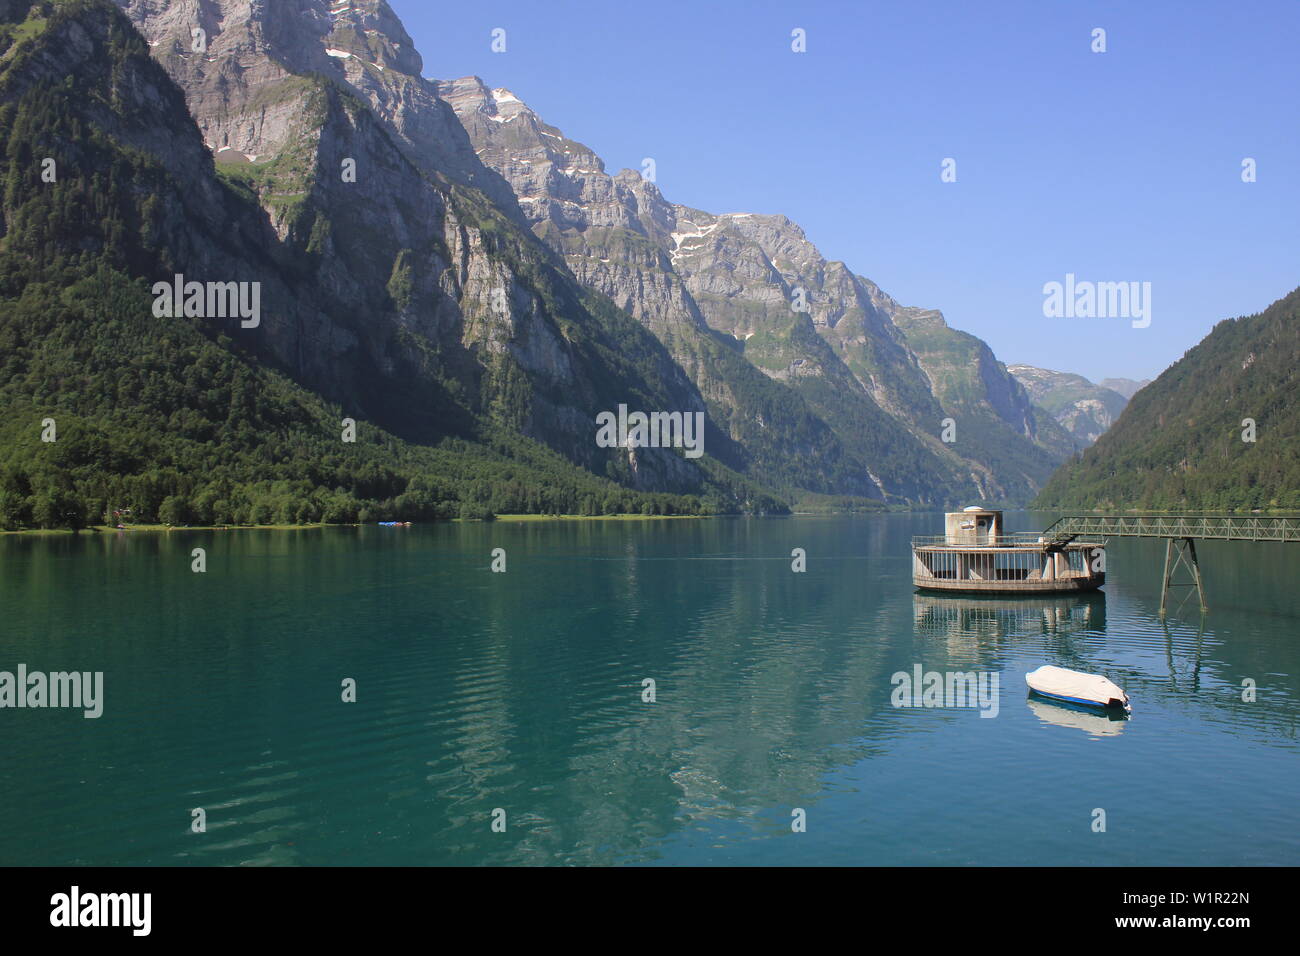 Mountains of the Glaernisch range and clear water of Lake Kloental, Switzerland. Stock Photo